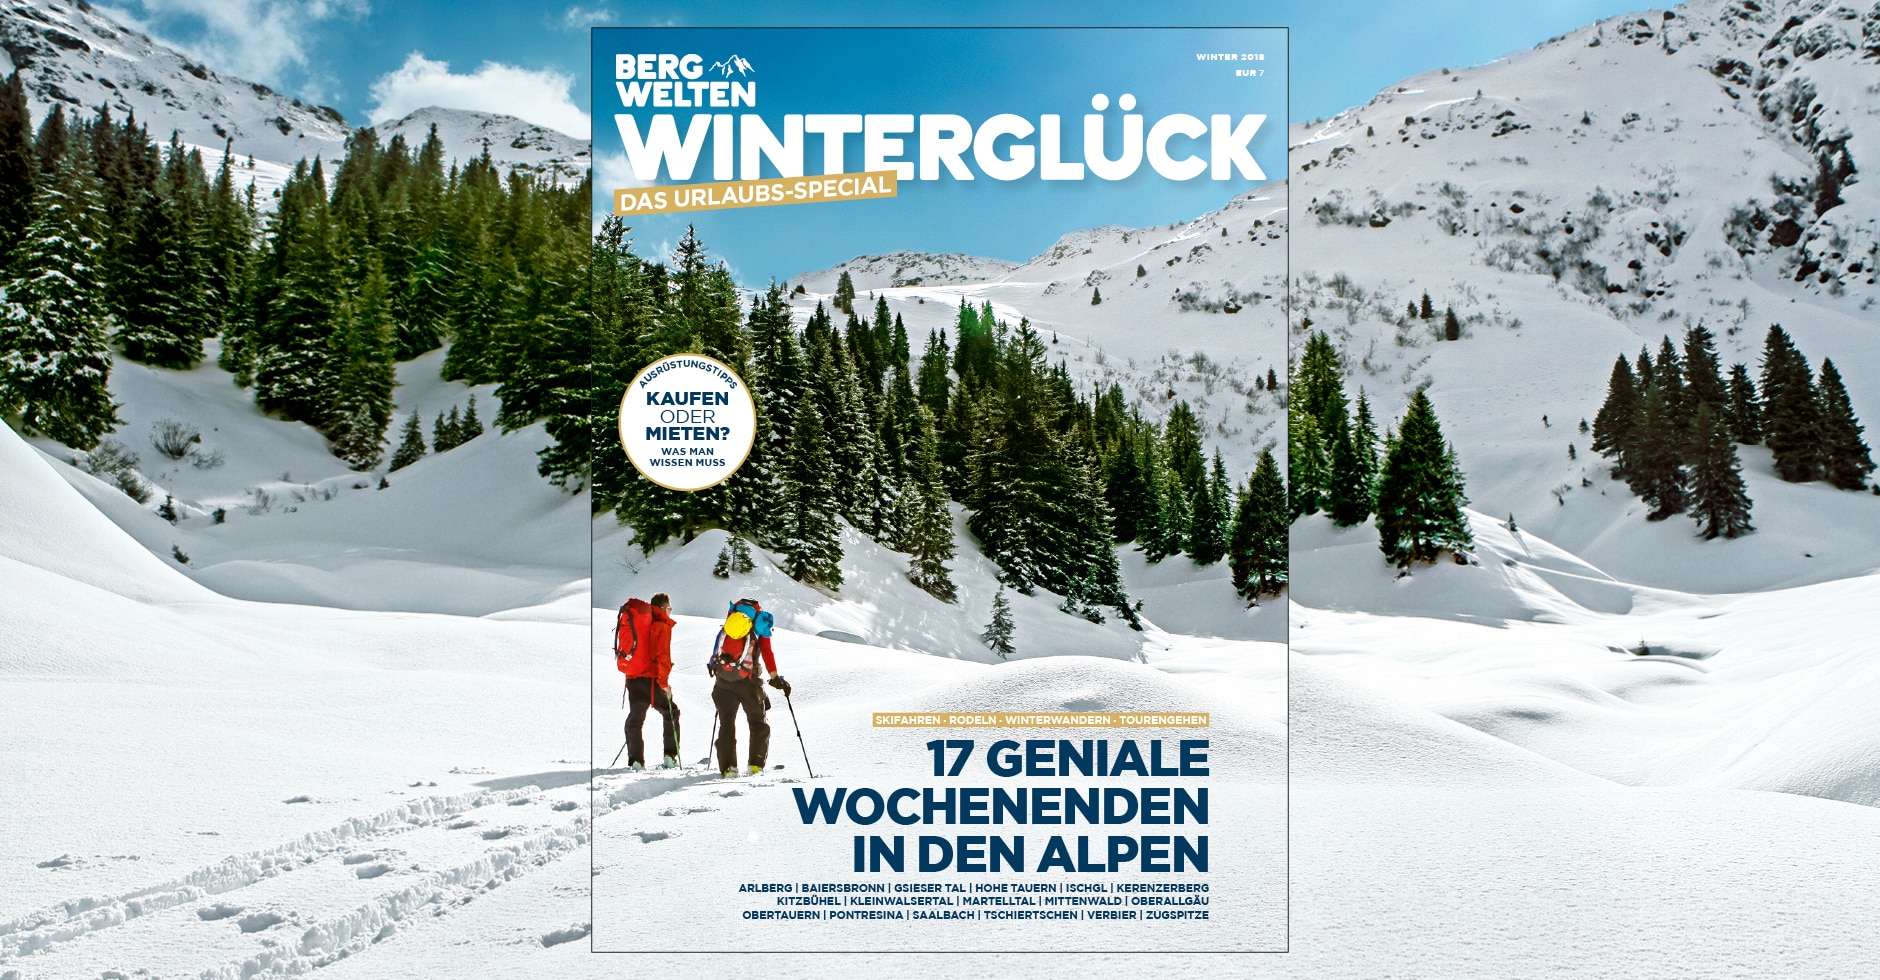 Bergwelten Winter-Special 2017/18